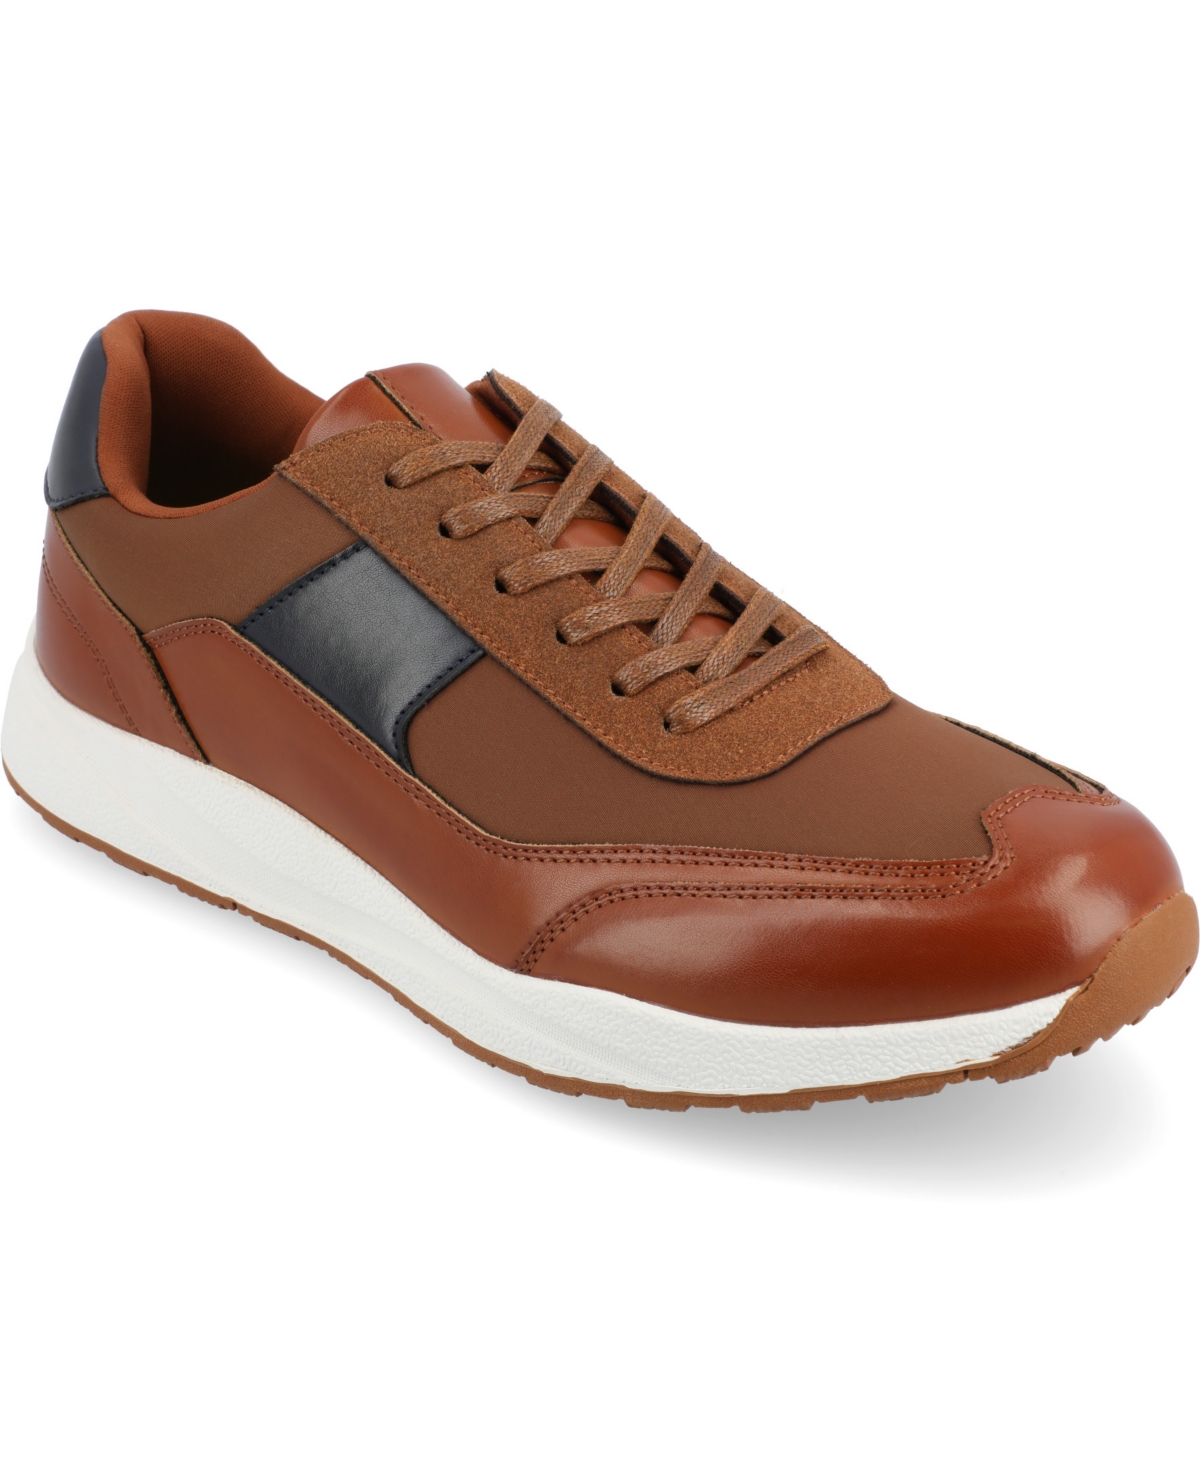 Men's Thomas Tru Comfort Foam Casual Lace-Up Sneakers - Brown